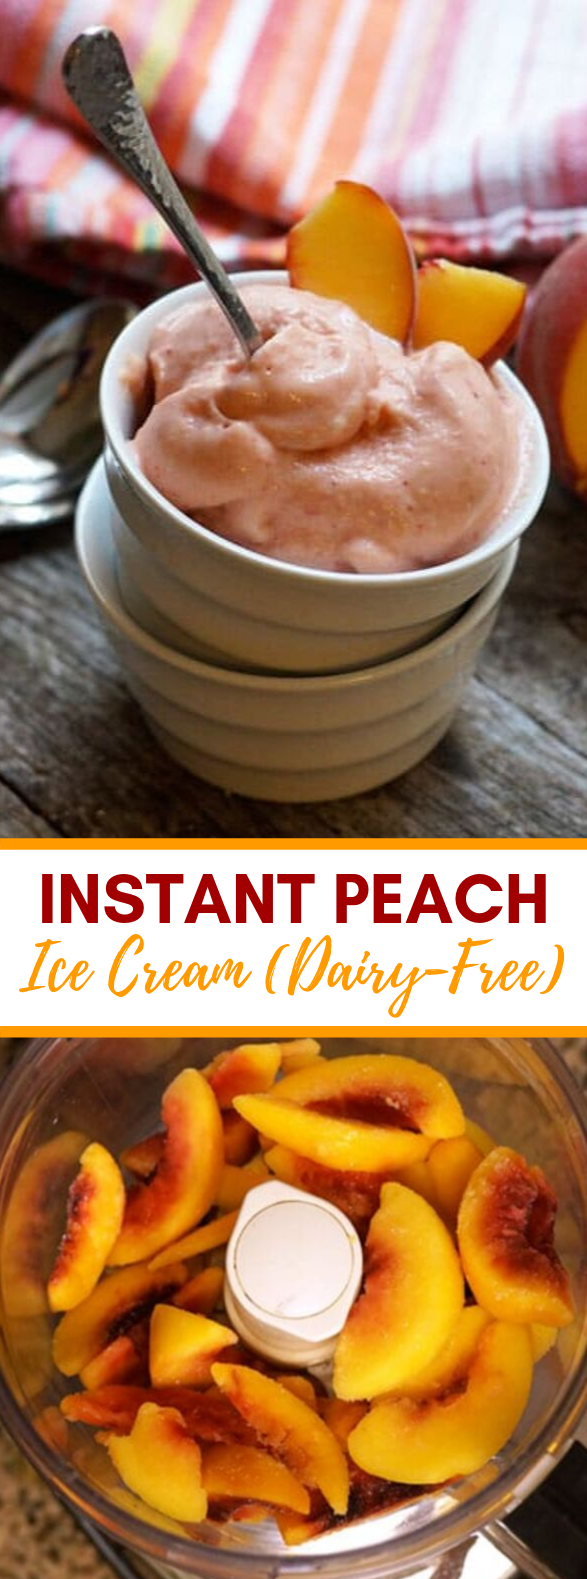 INSTANT PEACH ICE CREAM (DAIRY-FREE) #desserts #healthy